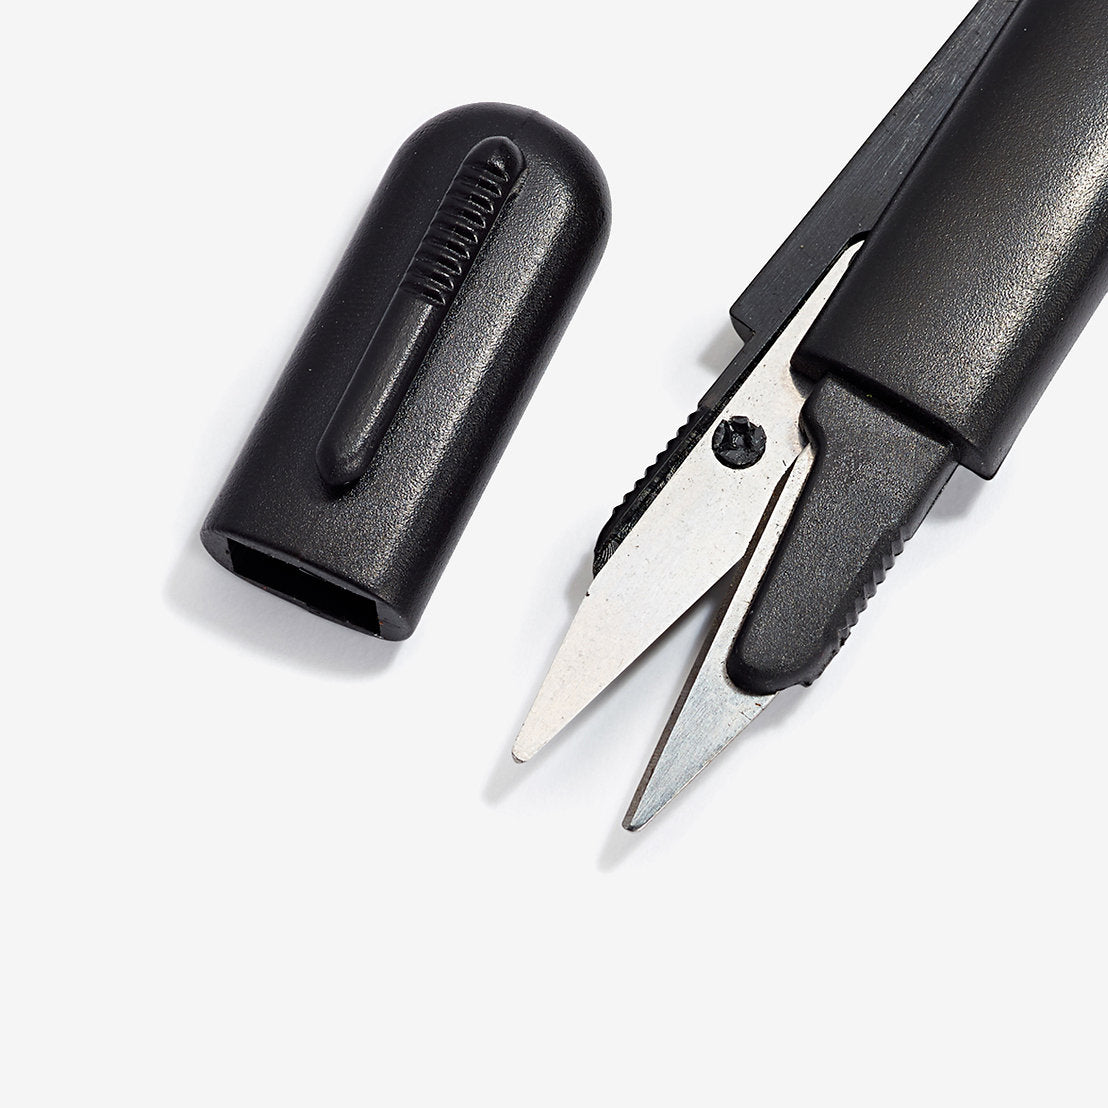 Prym 611505 Folding Scissors for Precision Thread Cutting - Standard Handle and Cap